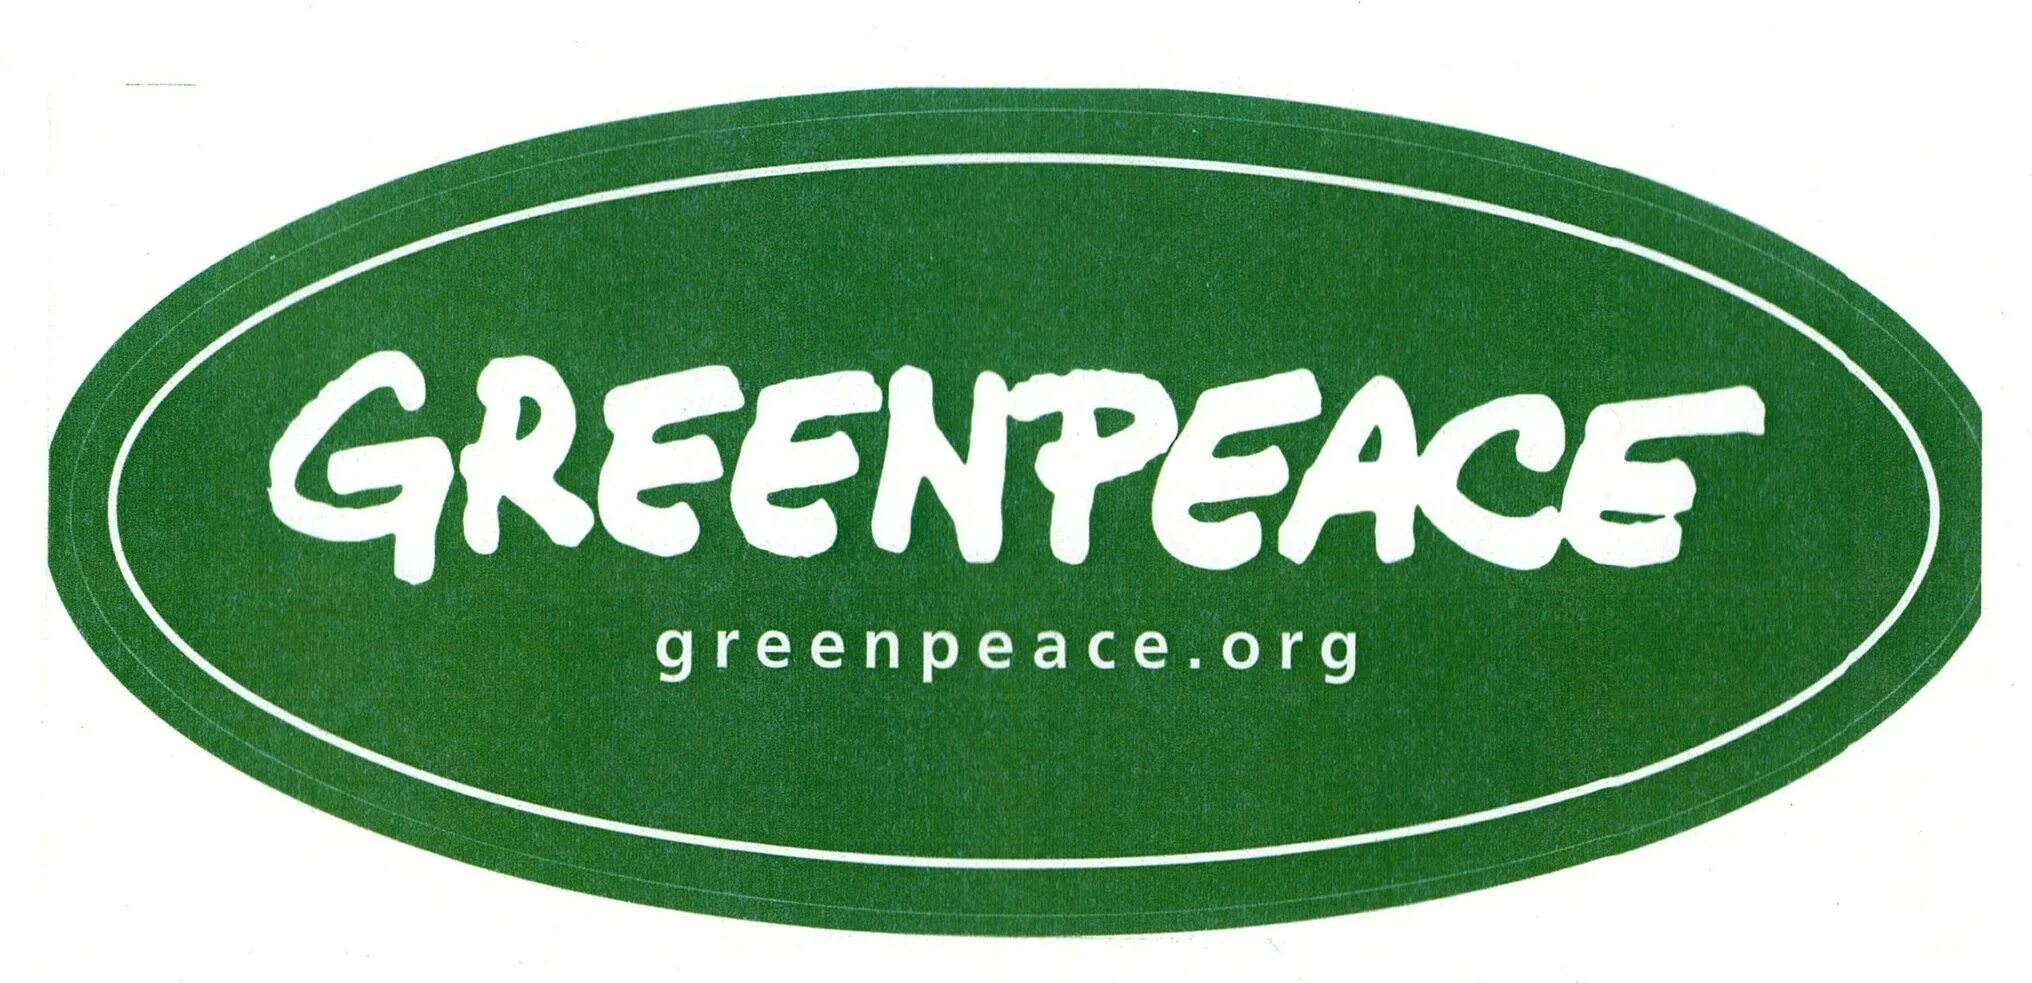 Гринпис. Greenpeace логотип. Гриин писы. 3 greenpeace